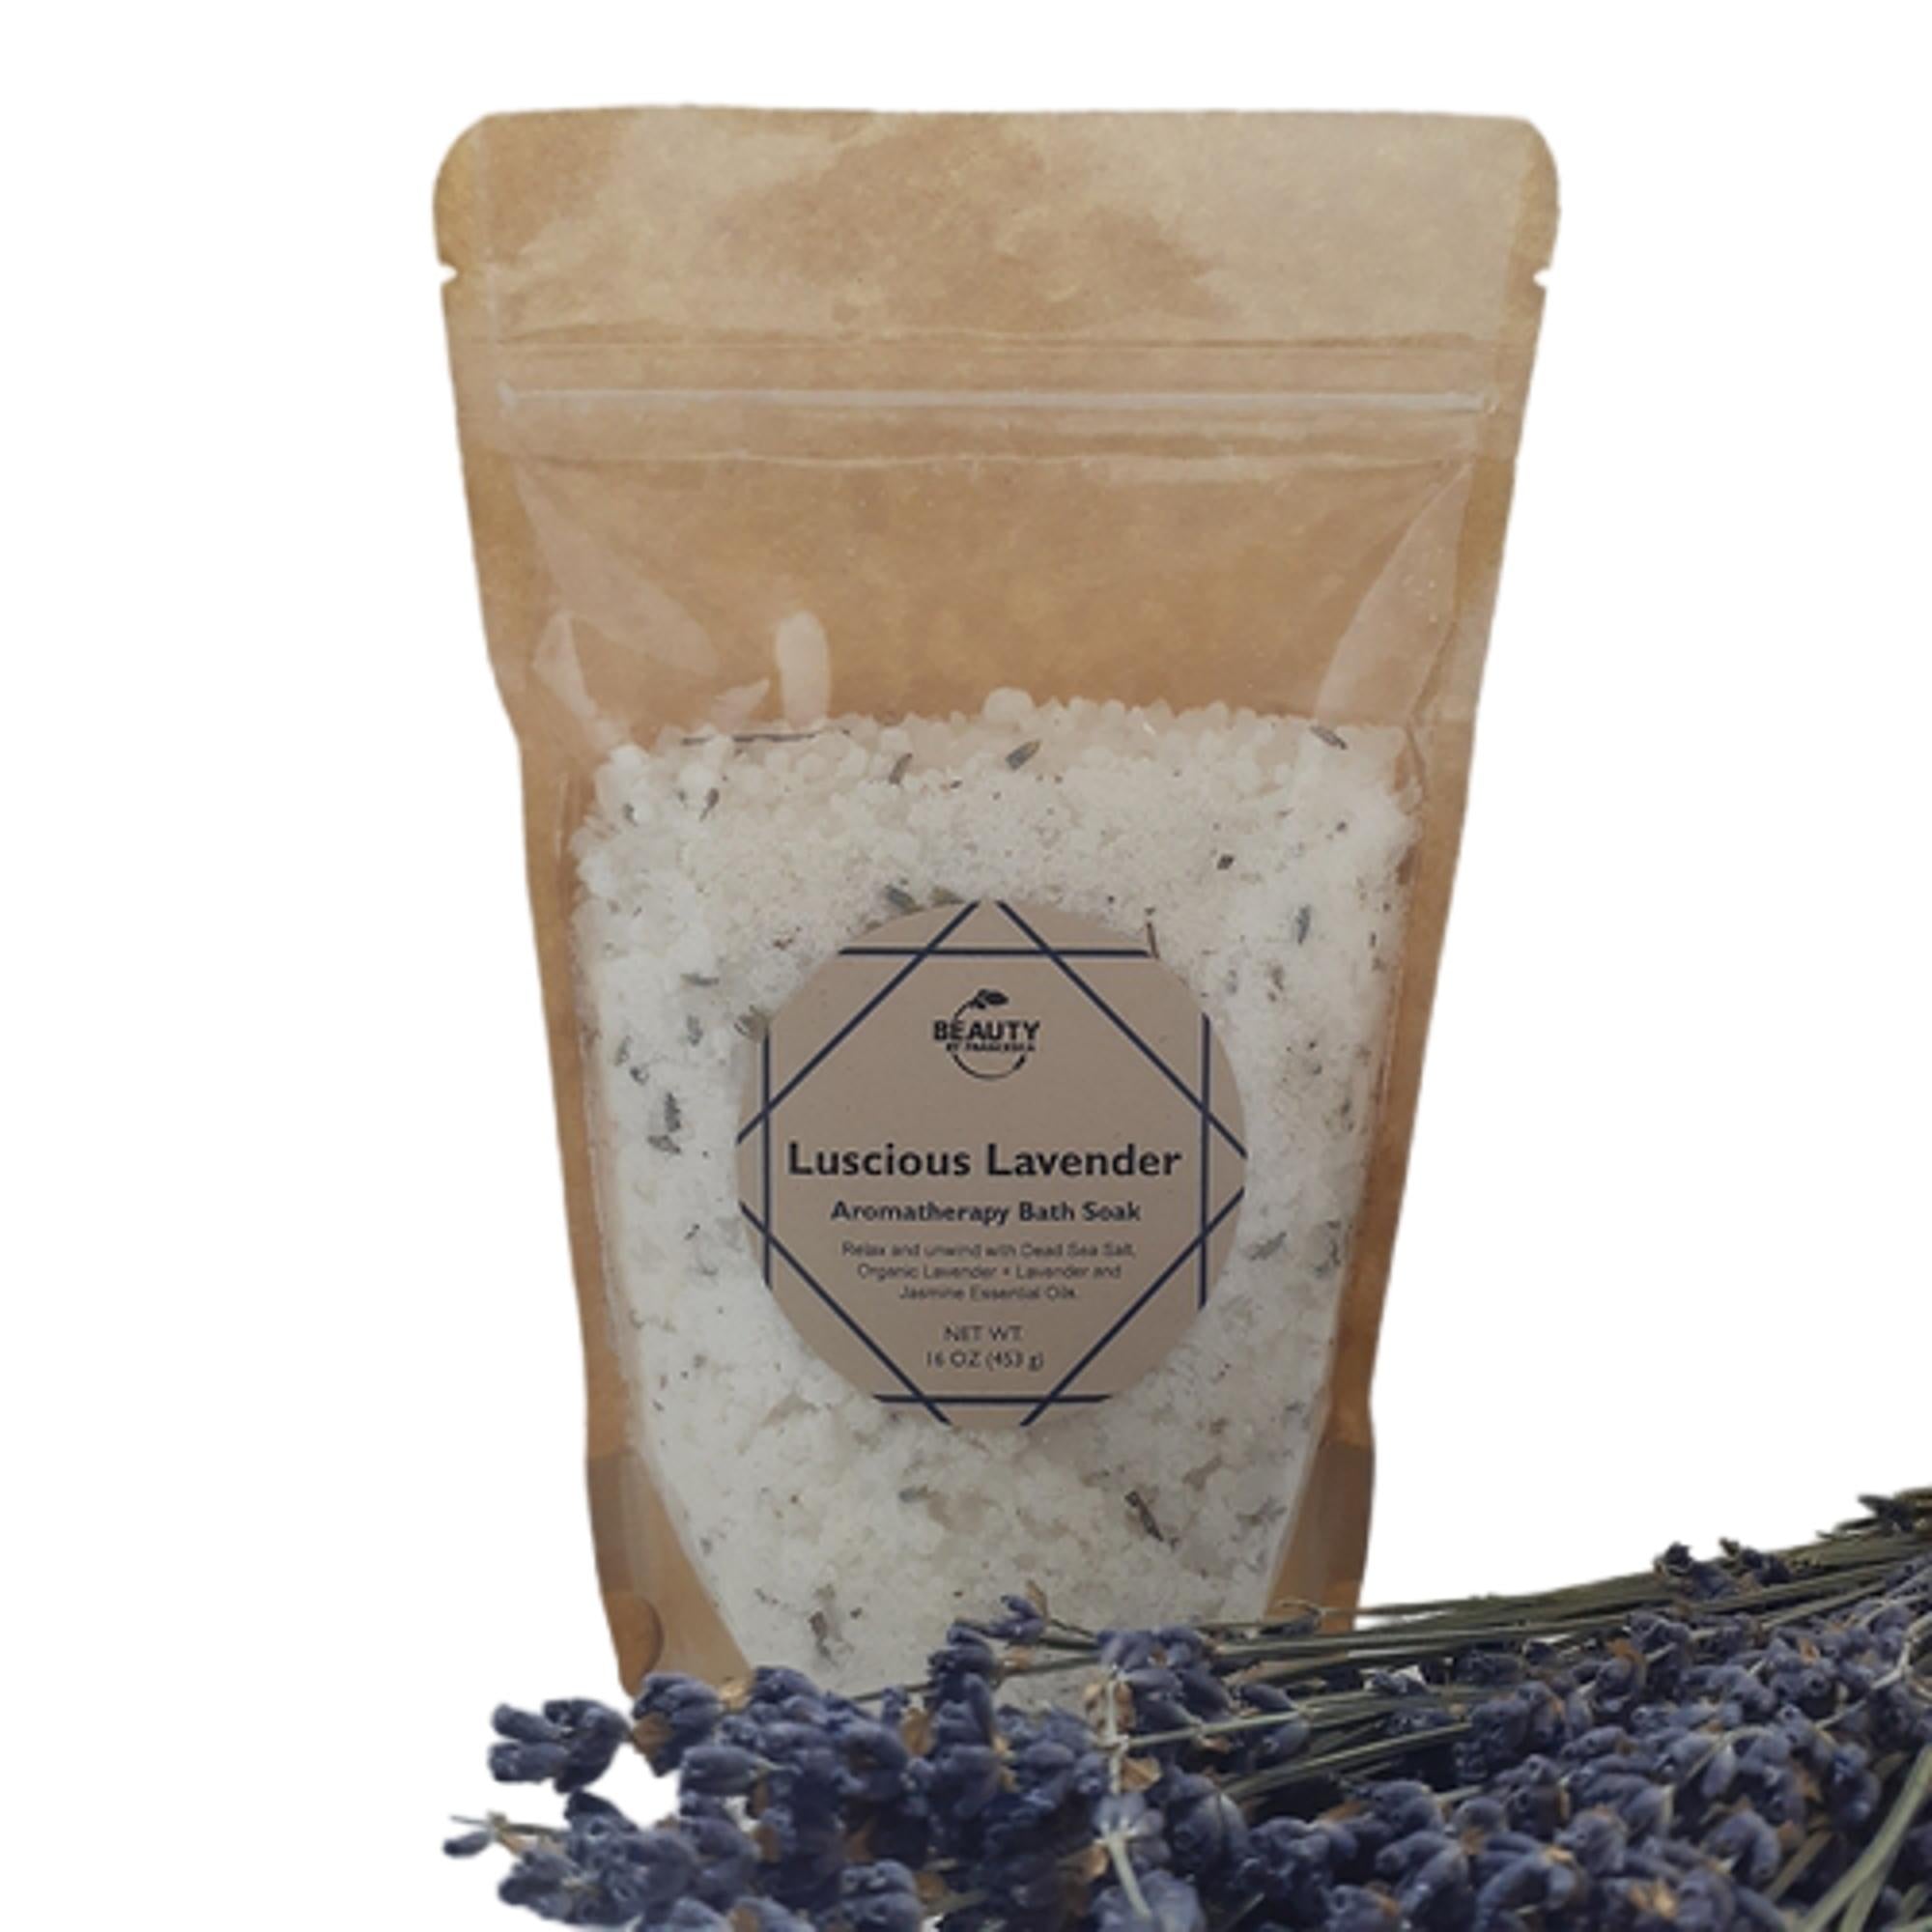 luscious lavender bath salt displayed